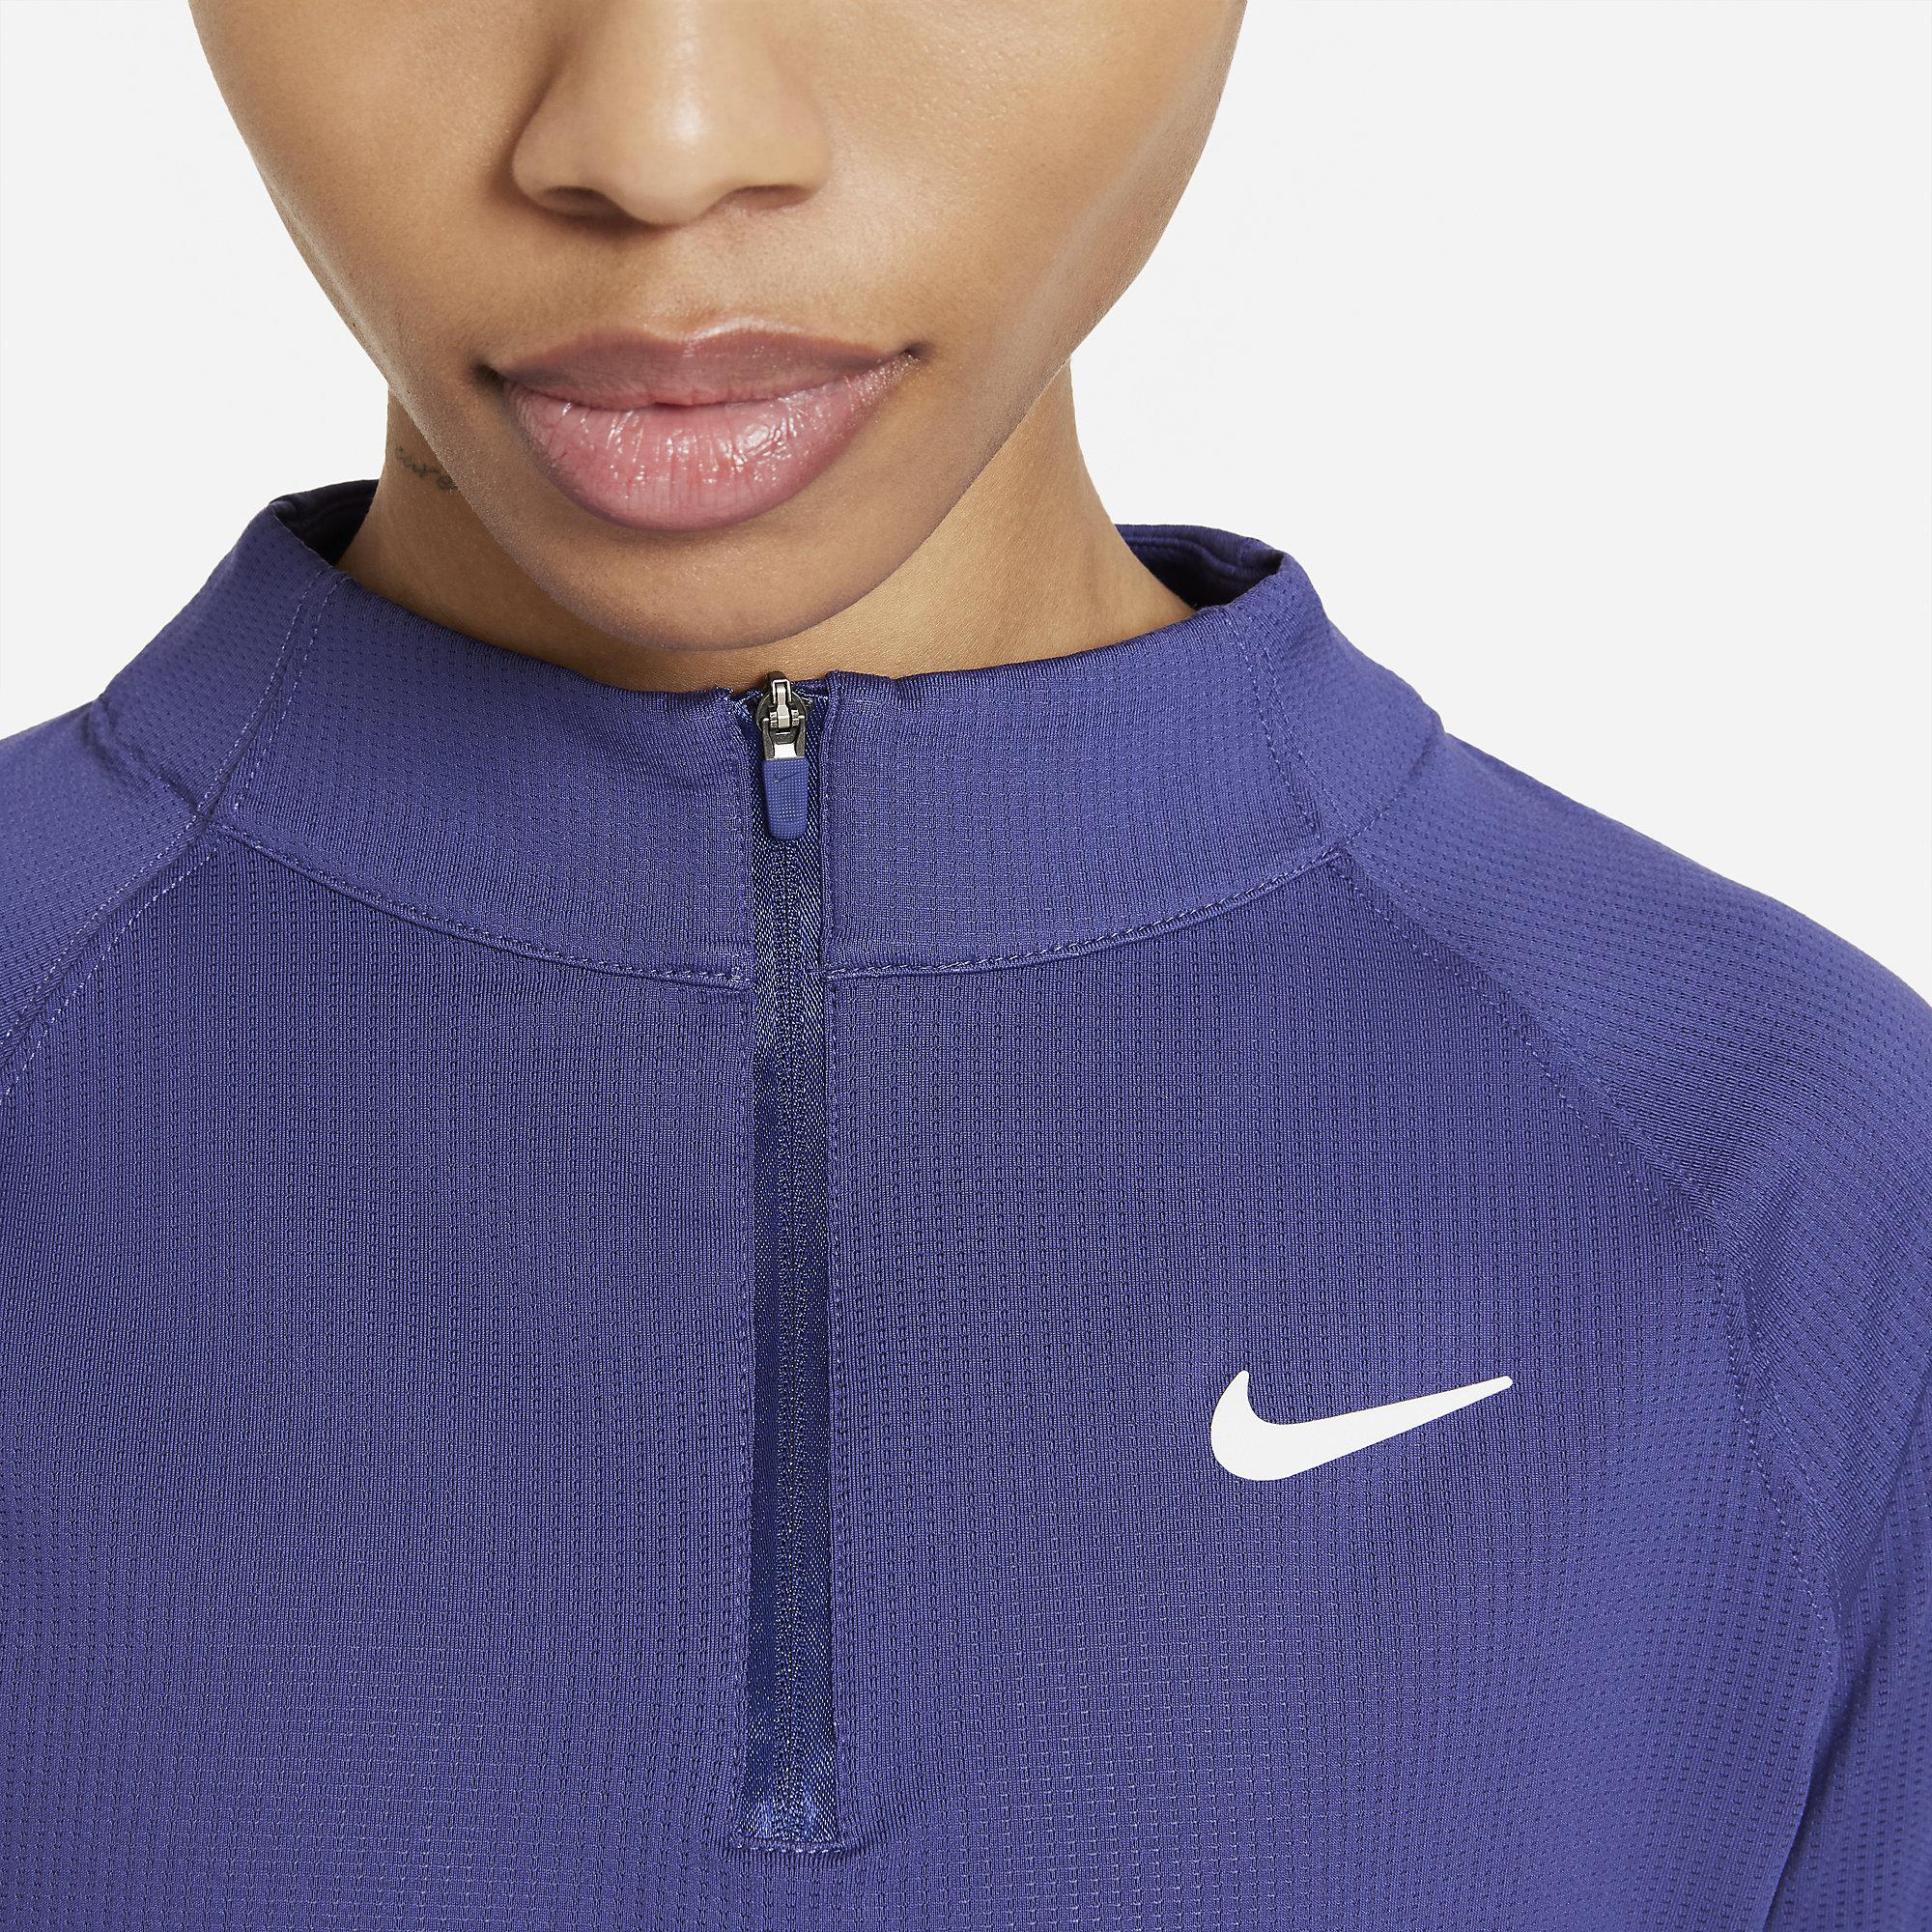 Nike Womens Victory Half Zip Tennis Top - Dark Purple Dust - Tennisnuts.com